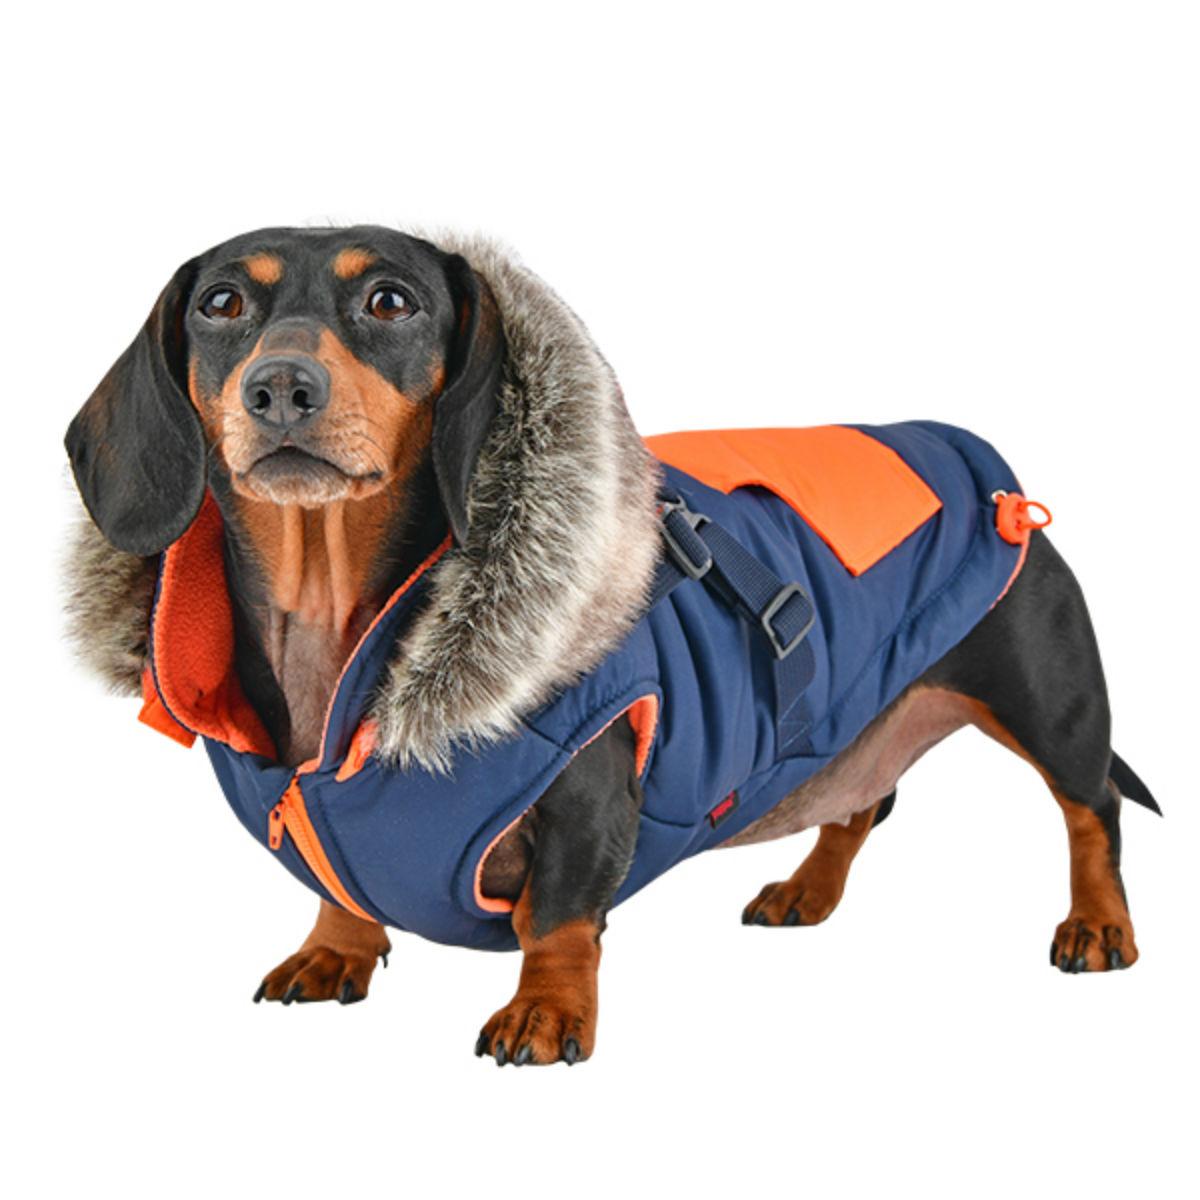 Orson Fleece Dog Vest By Puppia - Navy and Orange